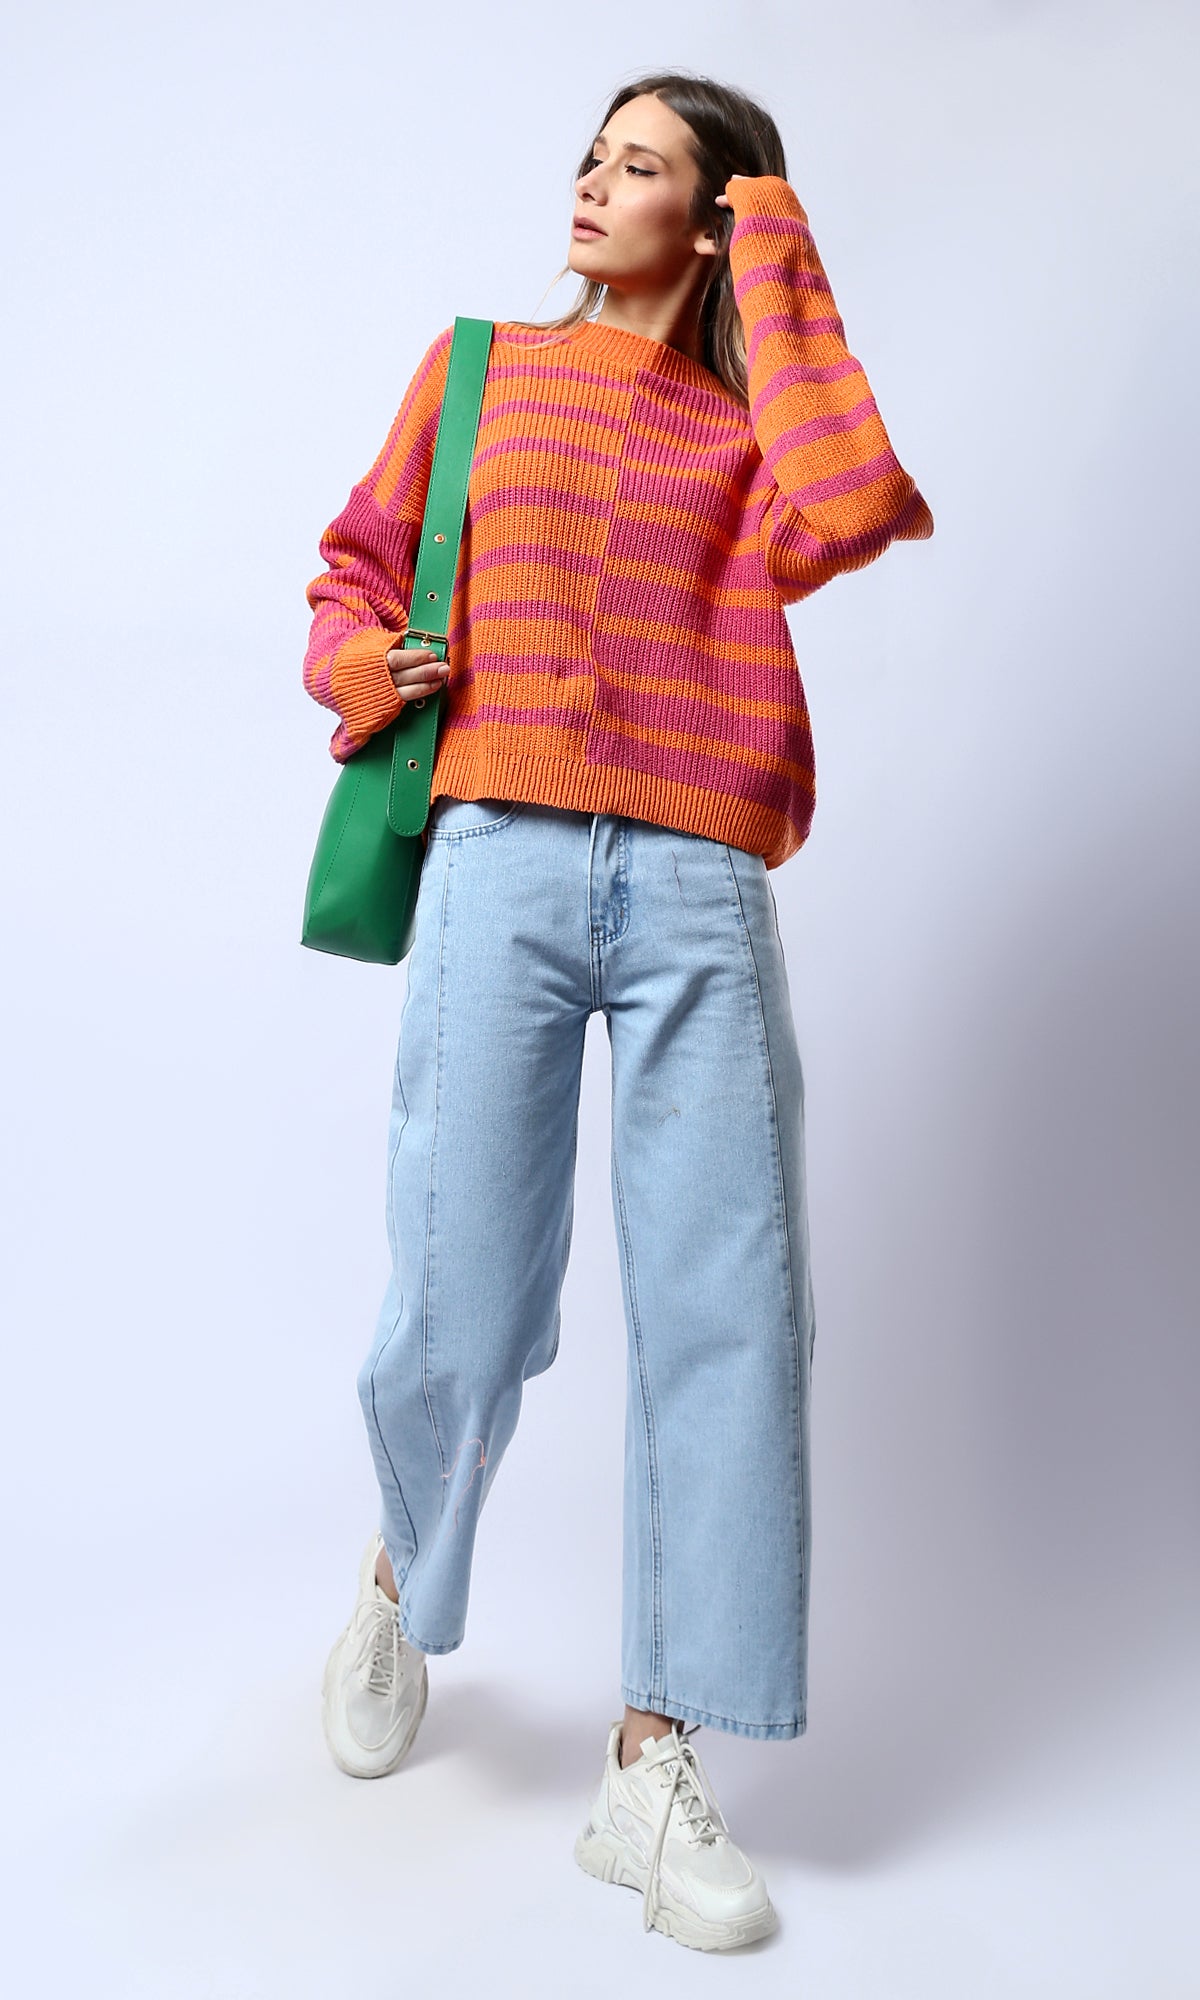 O173662 Bi-Tone Knitted Slip On Pullover - Fuchsia & Orange